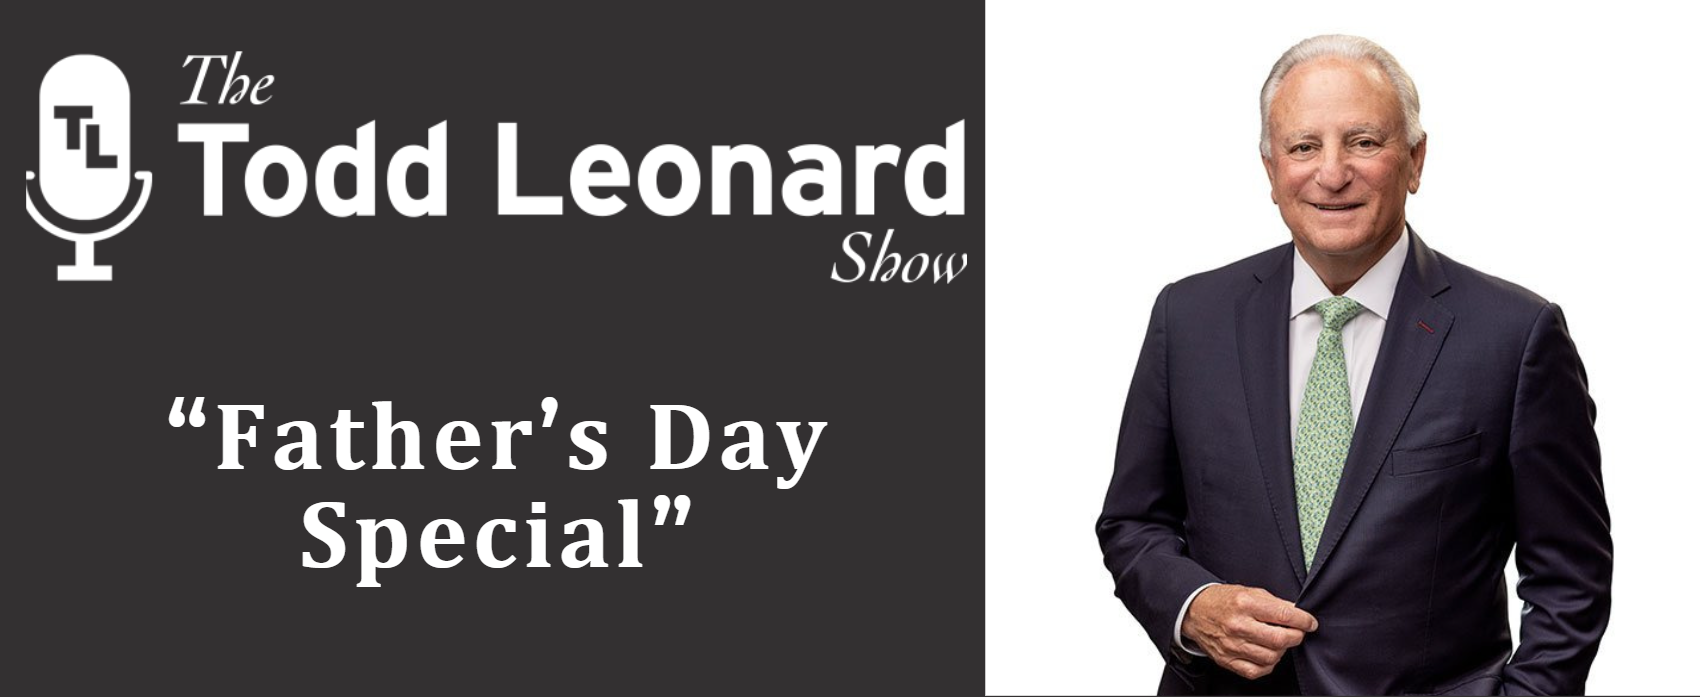 “𝐅𝐚𝐭𝐡𝐞𝐫’𝐬 𝐃𝐚𝐲 𝐒𝐩𝐞𝐜𝐢𝐚𝐥” | The Todd Leonard Show